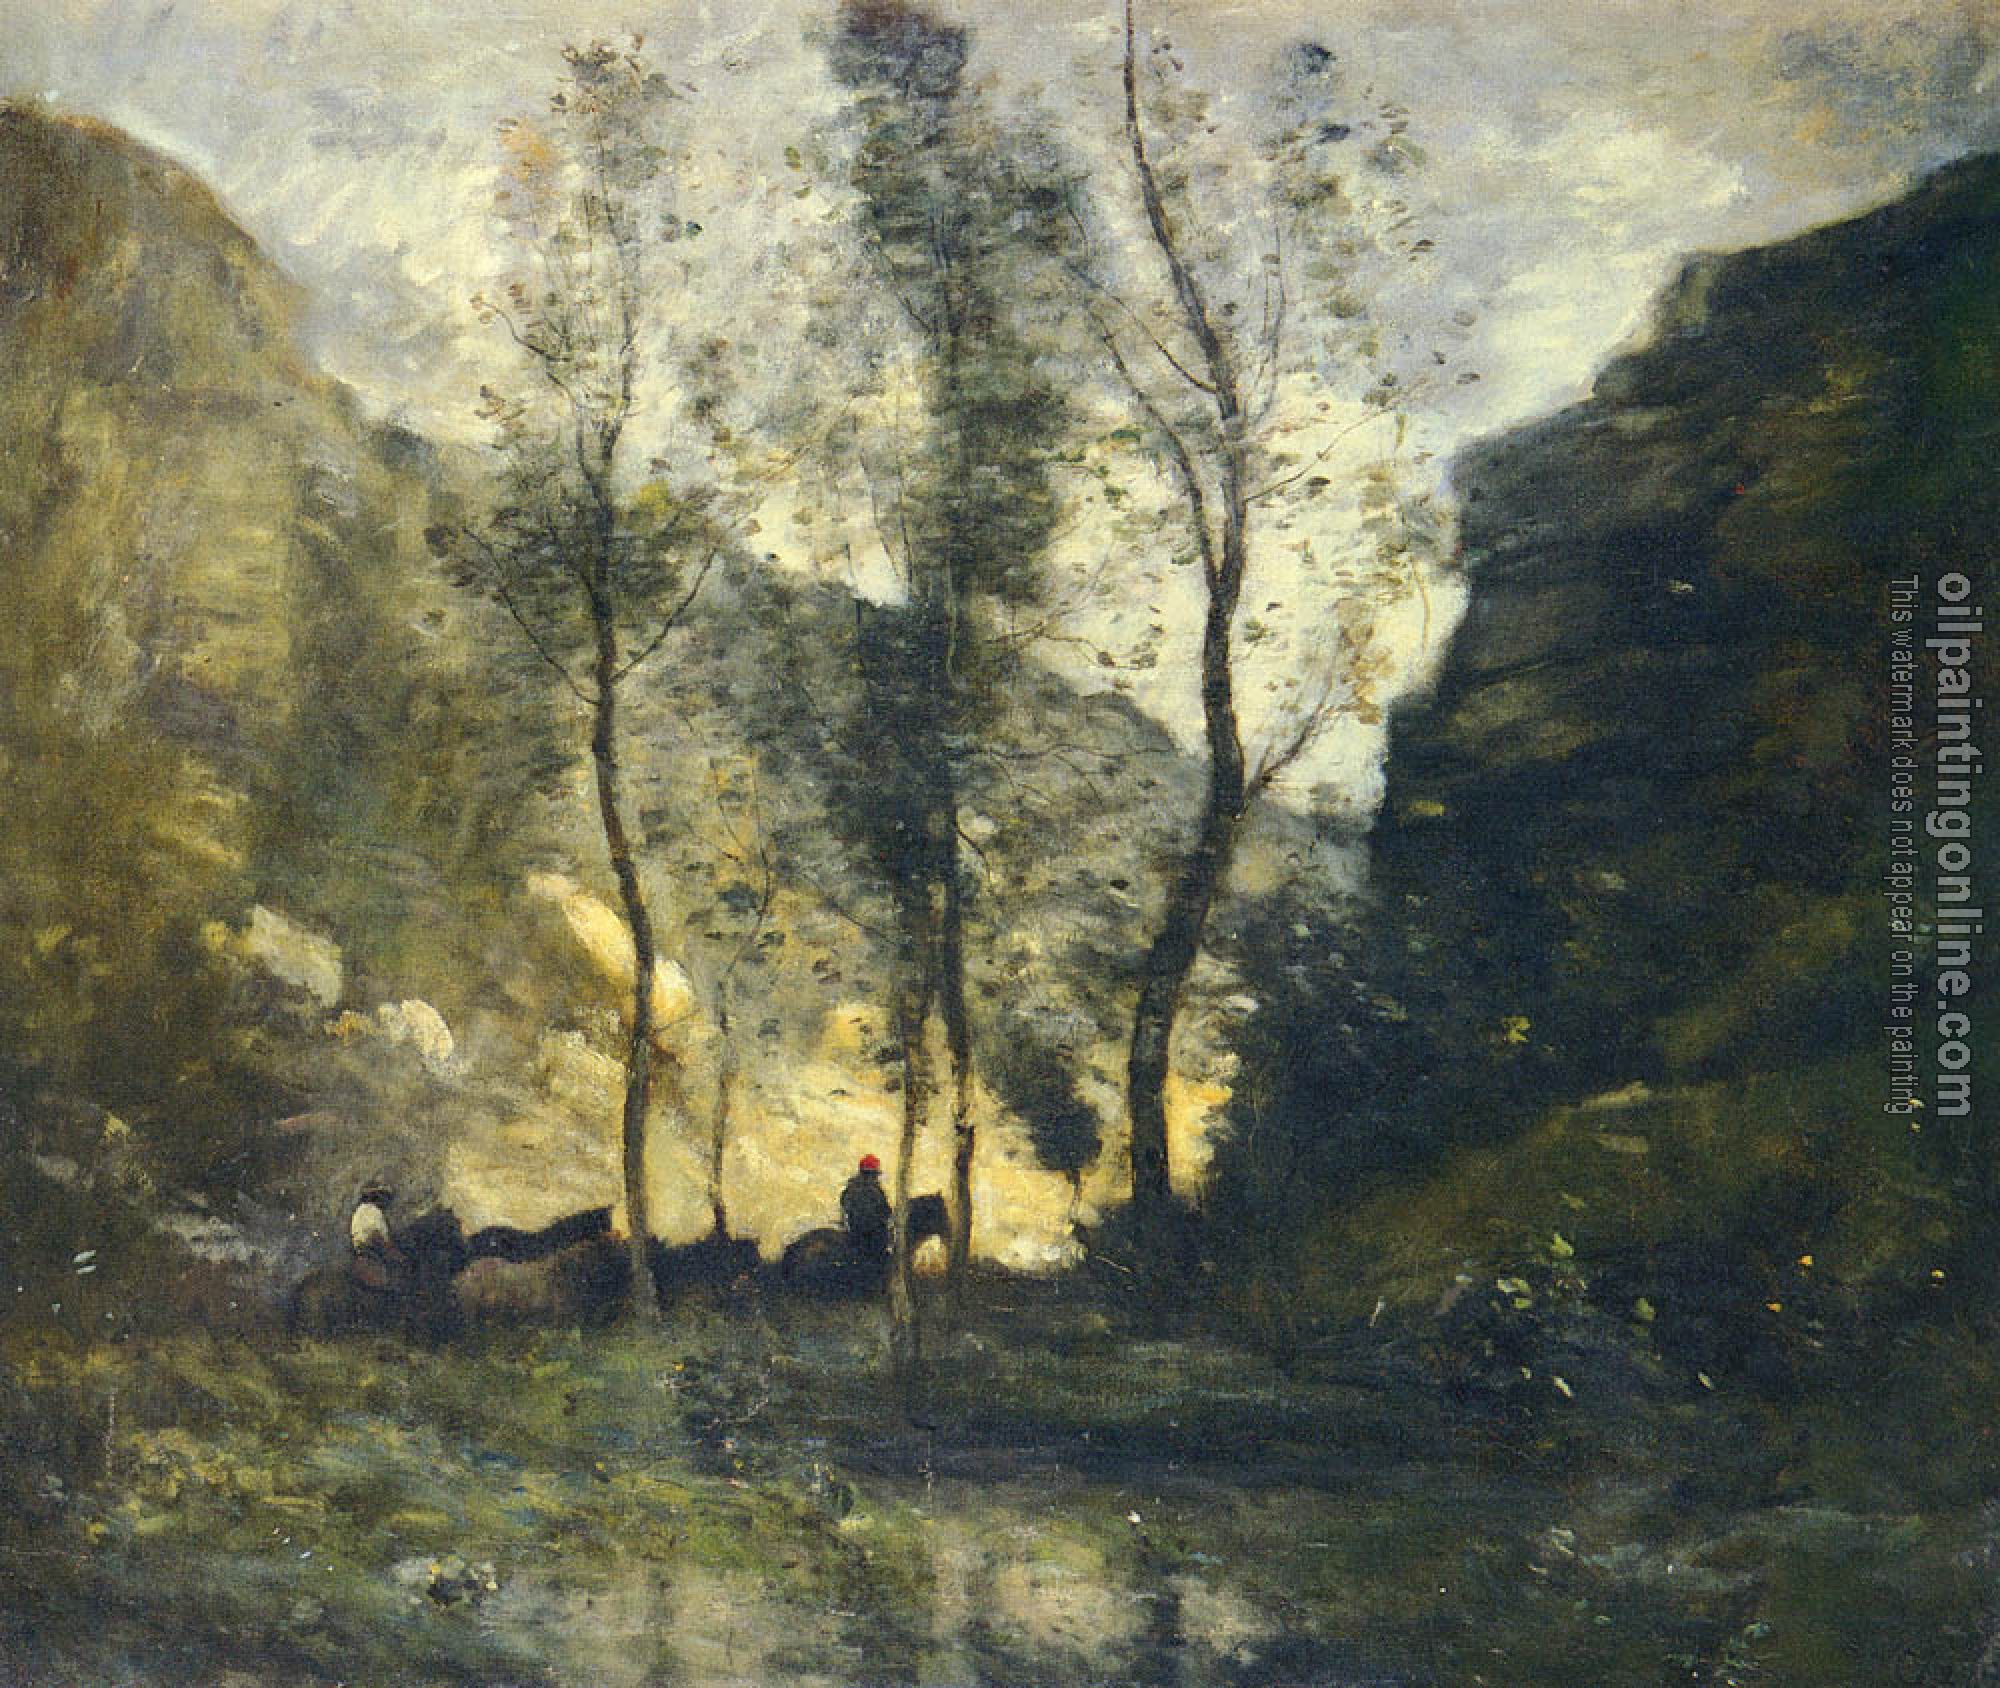 Corot, Jean-Baptiste-Camille - Les Contrebandiers